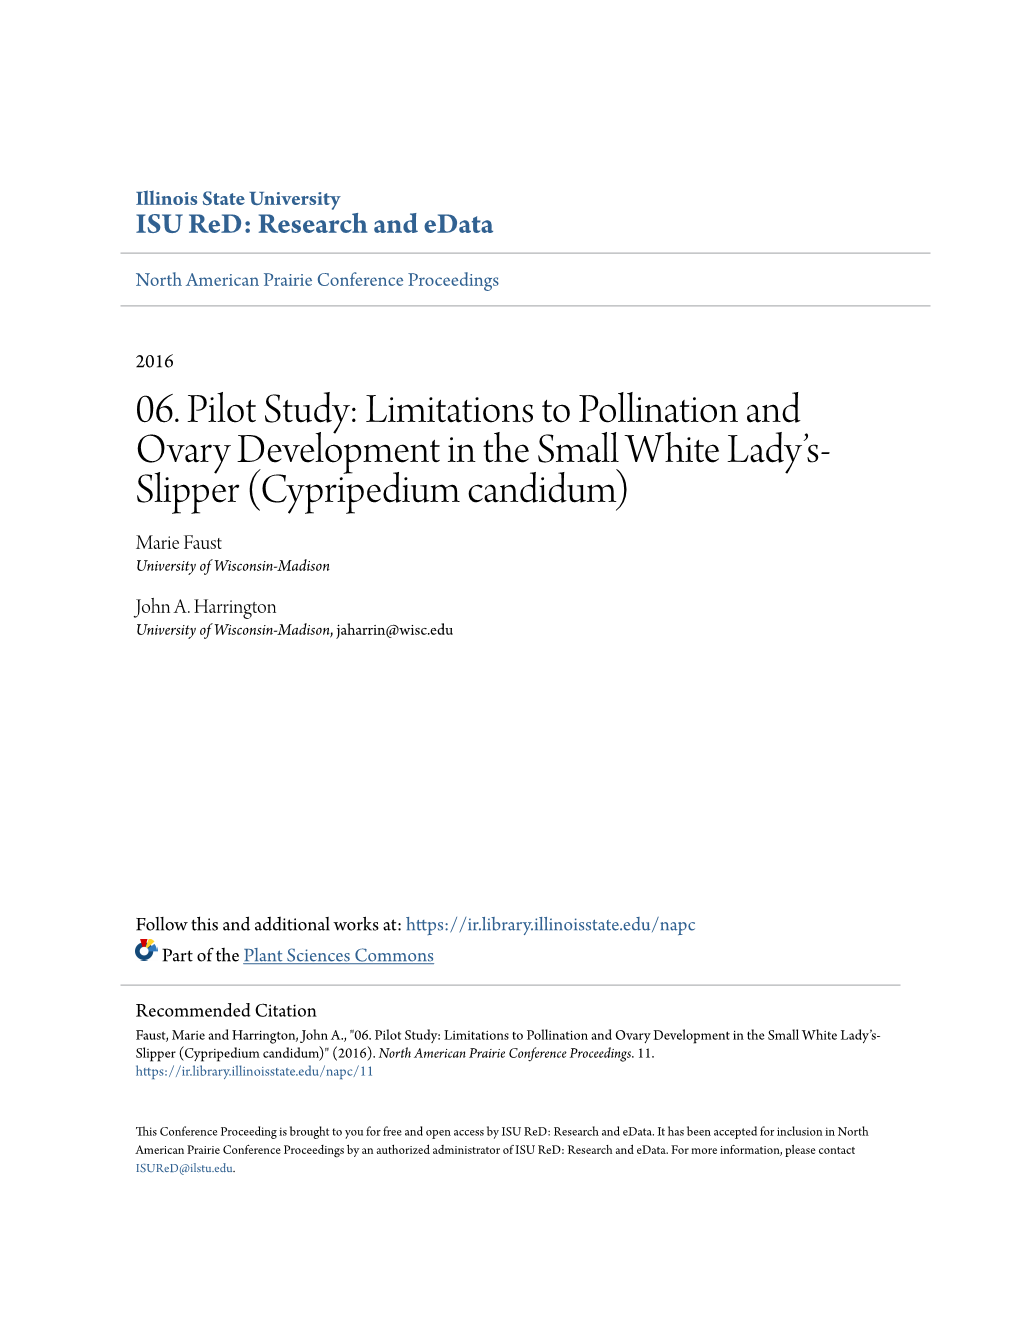 06. Pilot Study: Limitations to Pollination and Ovary Development